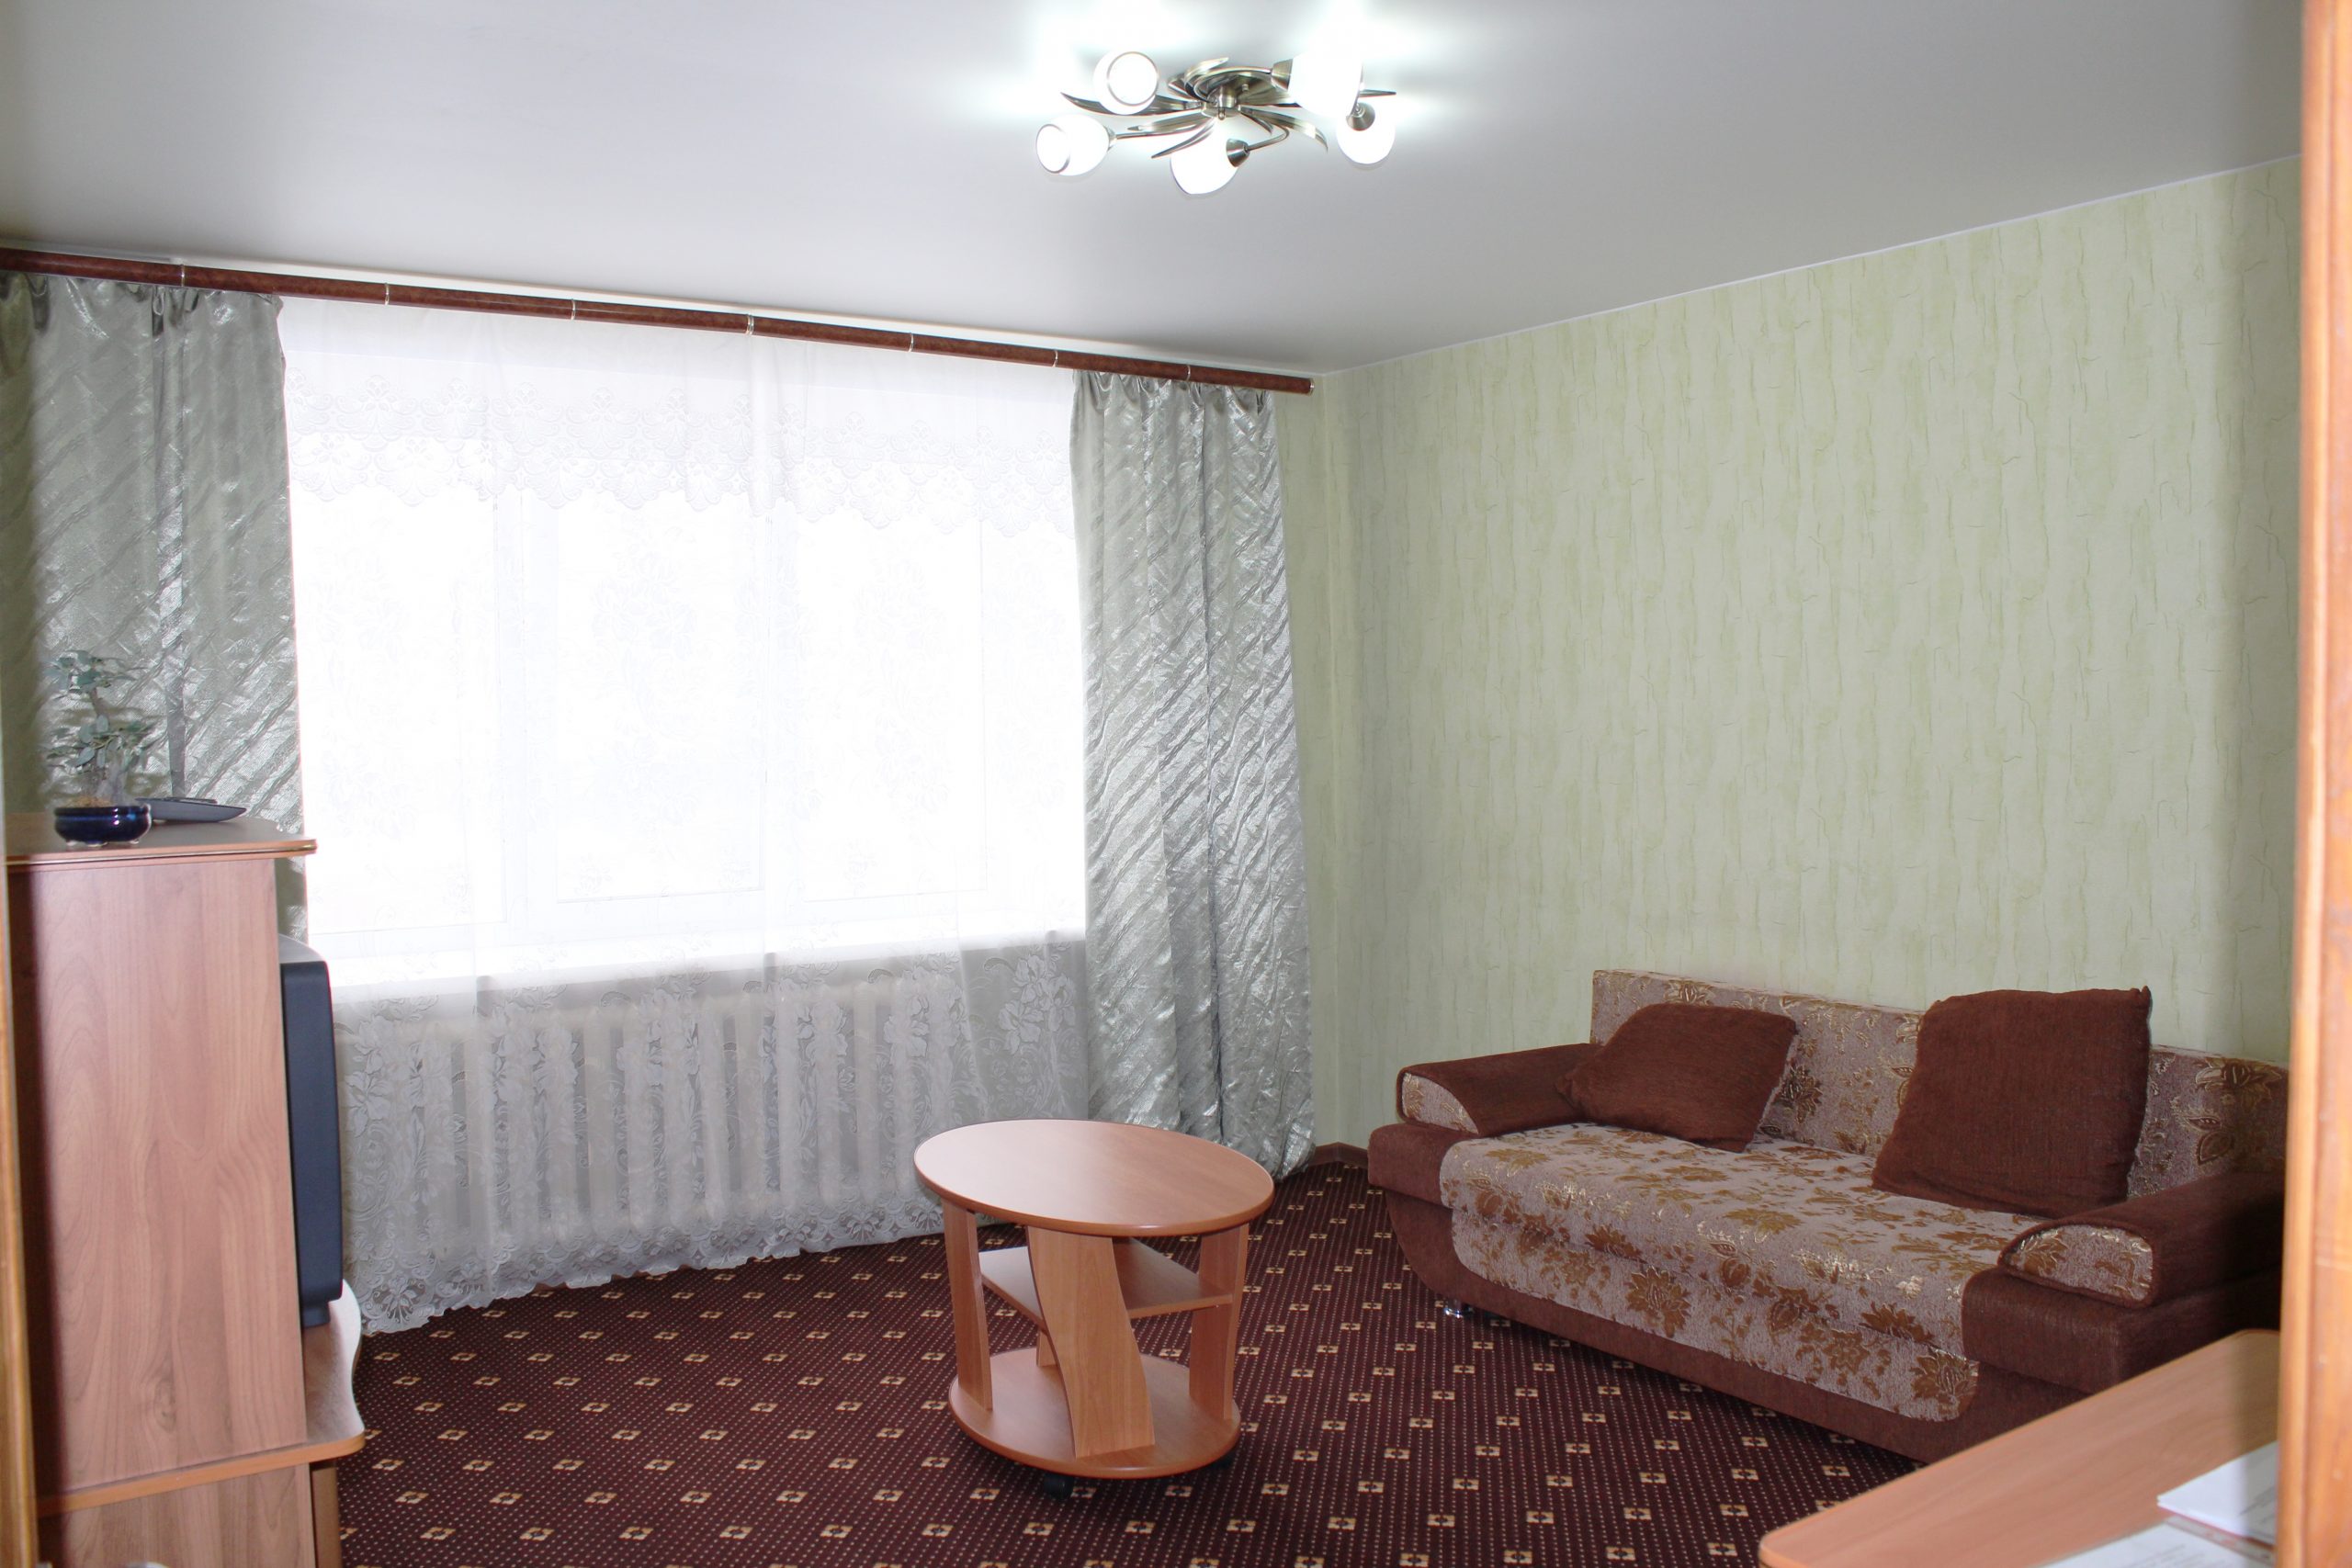 Однокомнатная квартира на ул. Матросова, 6 (37кв.м)до 4 гостей